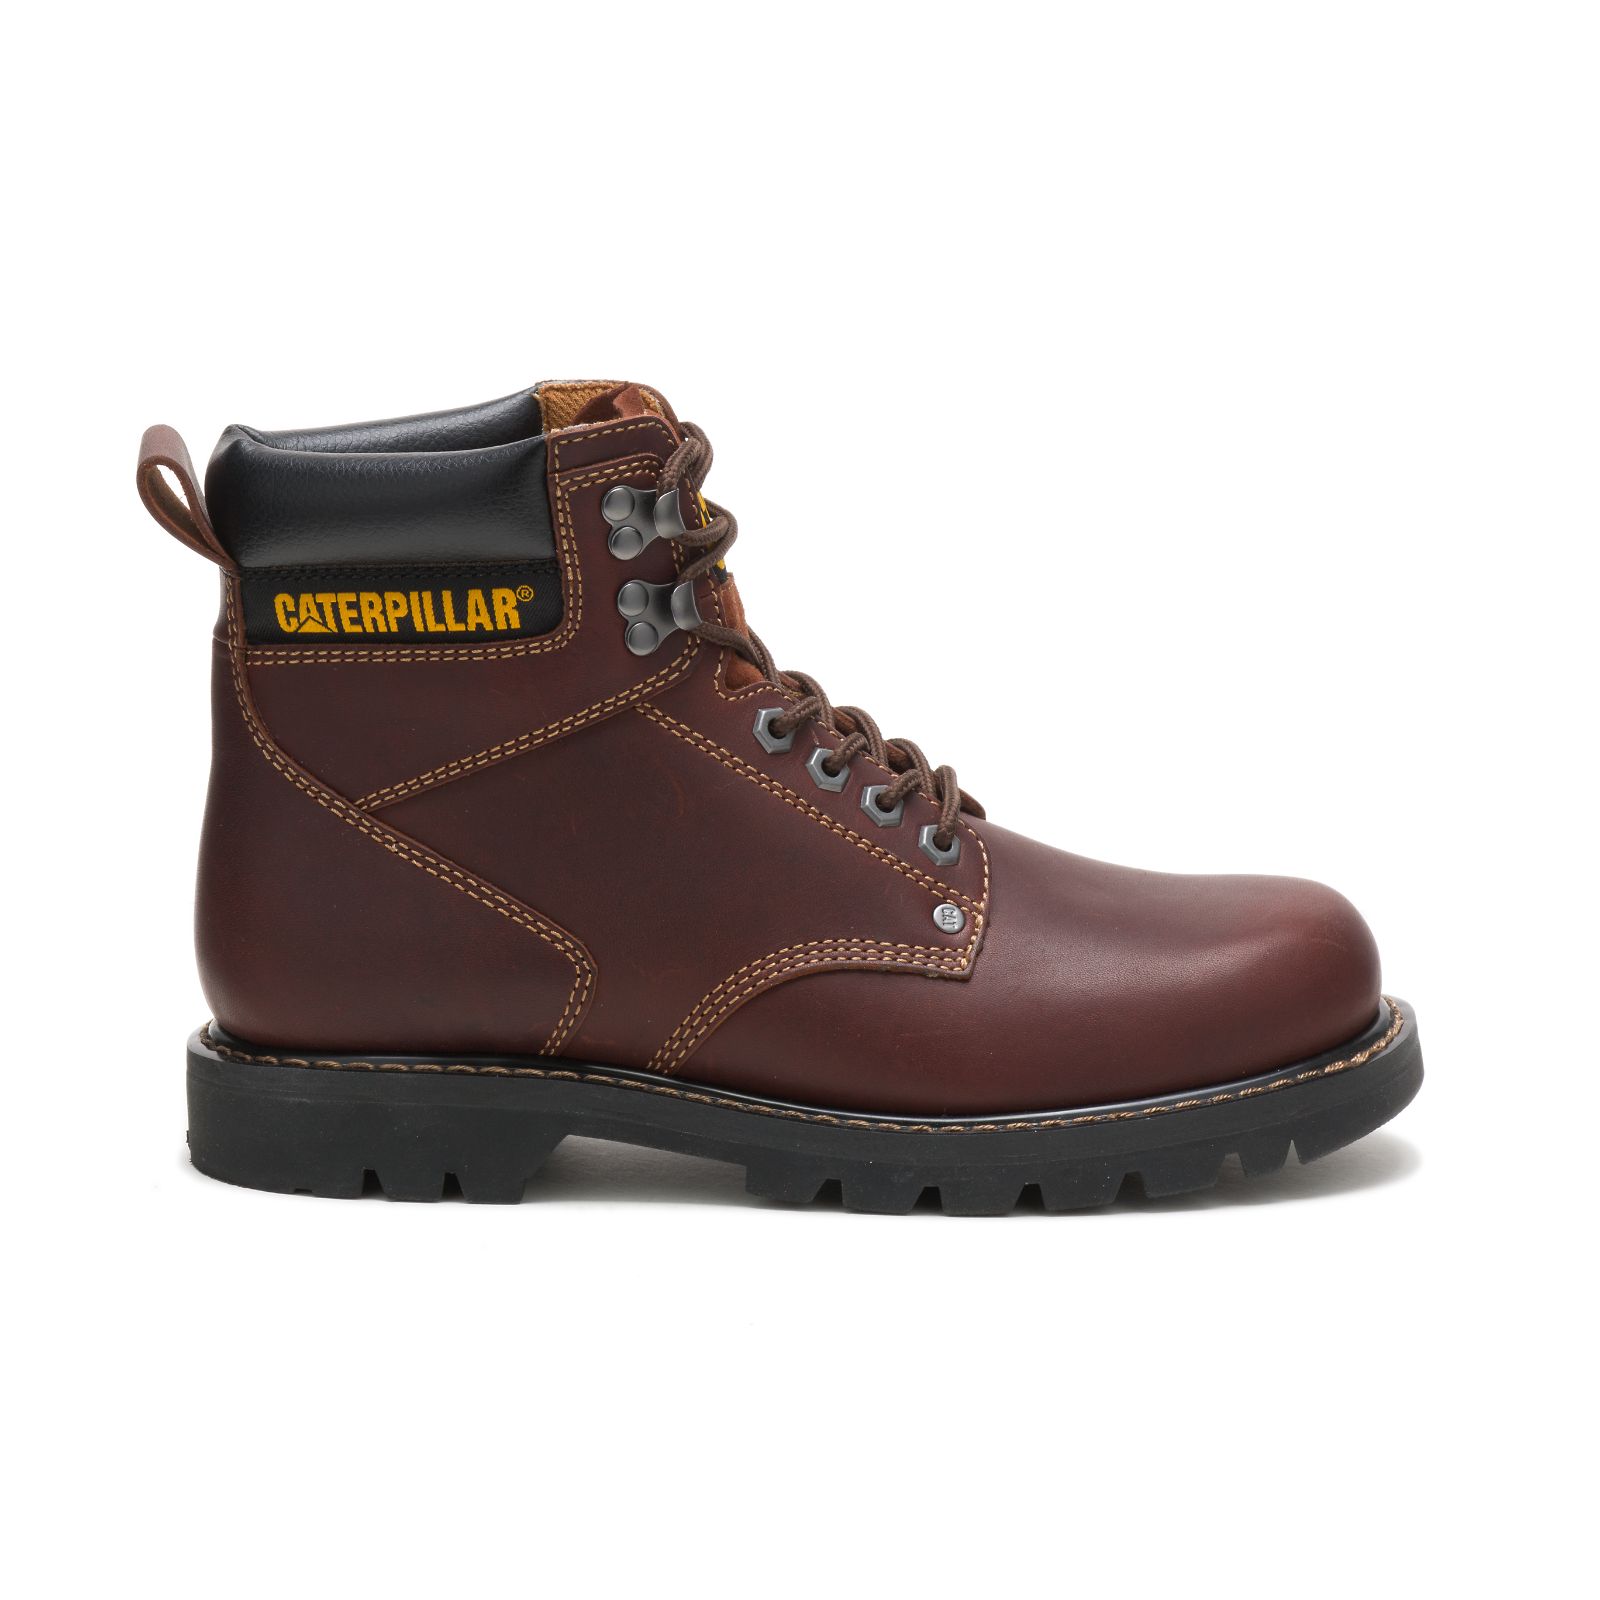 Caterpillar Second Shift Philippines - Mens Work Boots - Brown 79826HSQX